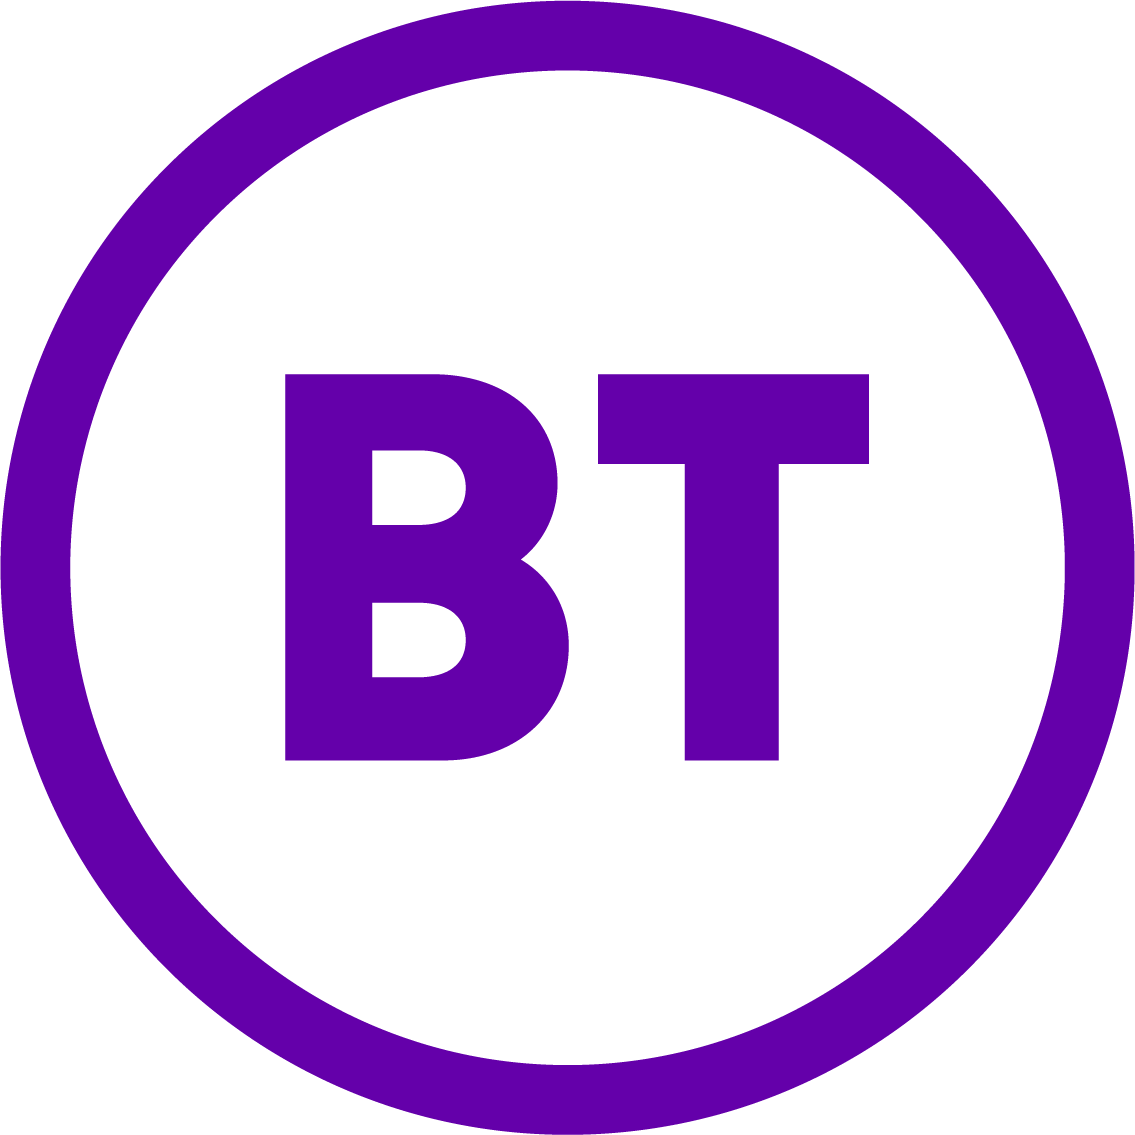 BT Business Broadband - Find the BT business broadband deal for you